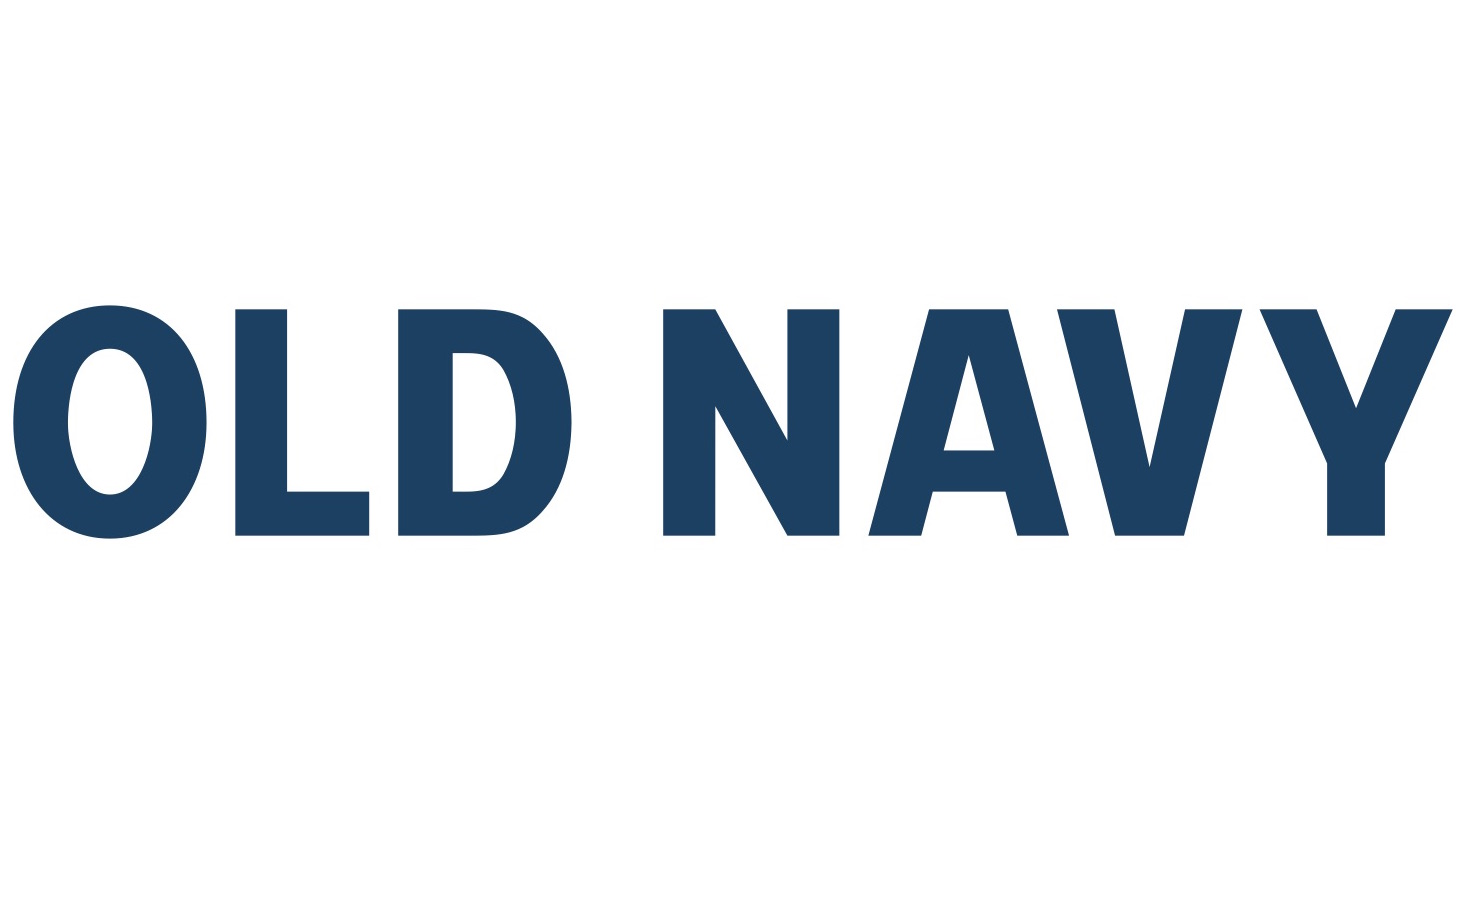 Old Navy Logo.